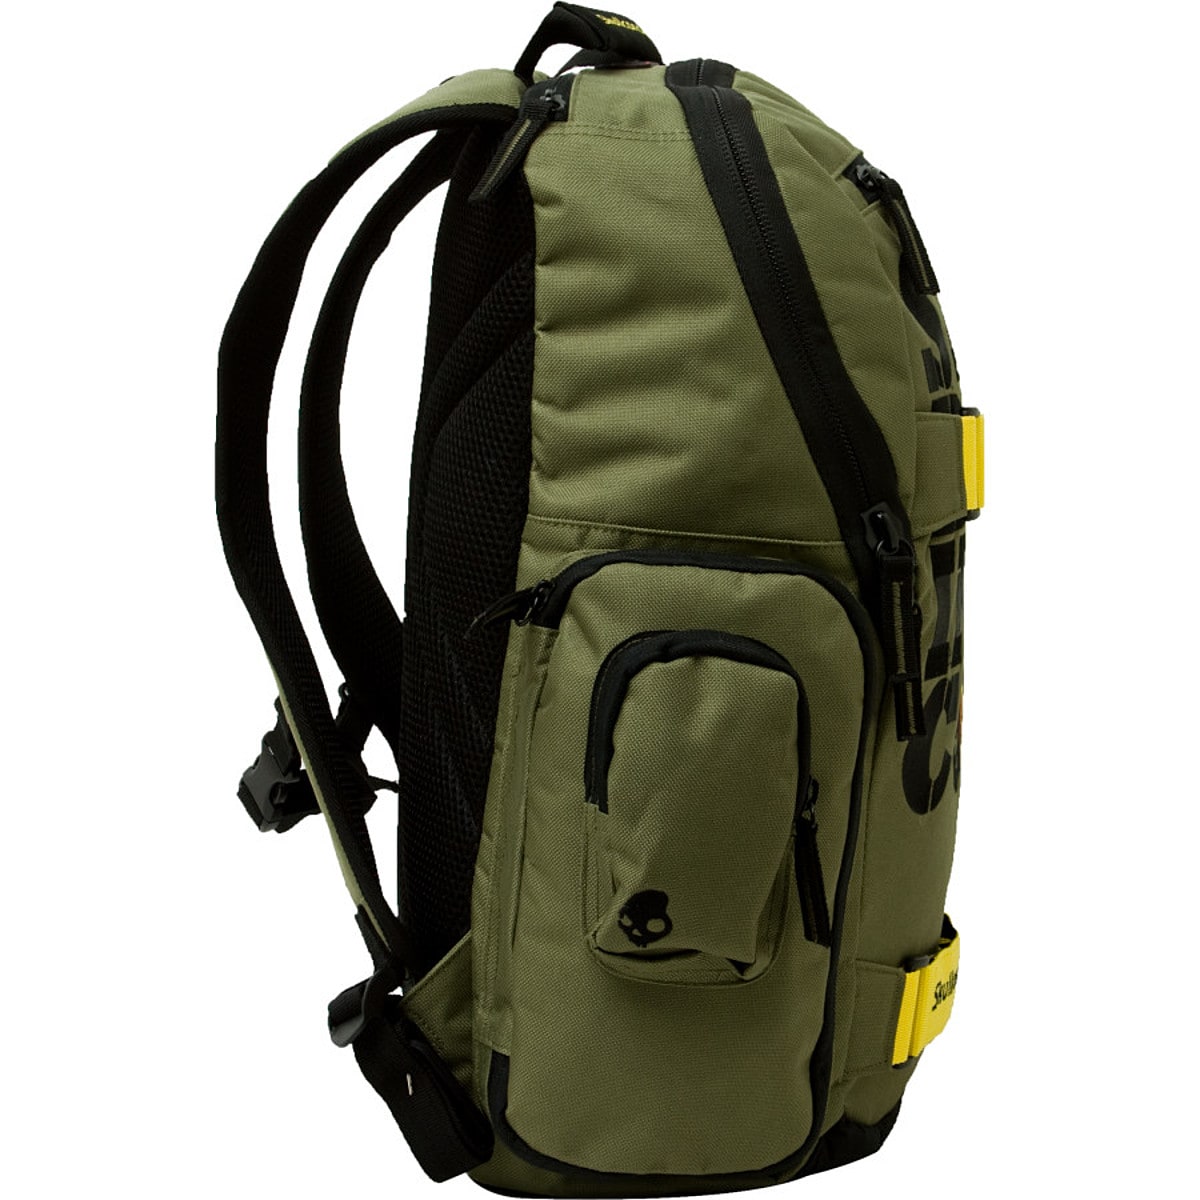 Skullcandy Backpack Olive Green Black Audio Laptop Sleeve School | eBay